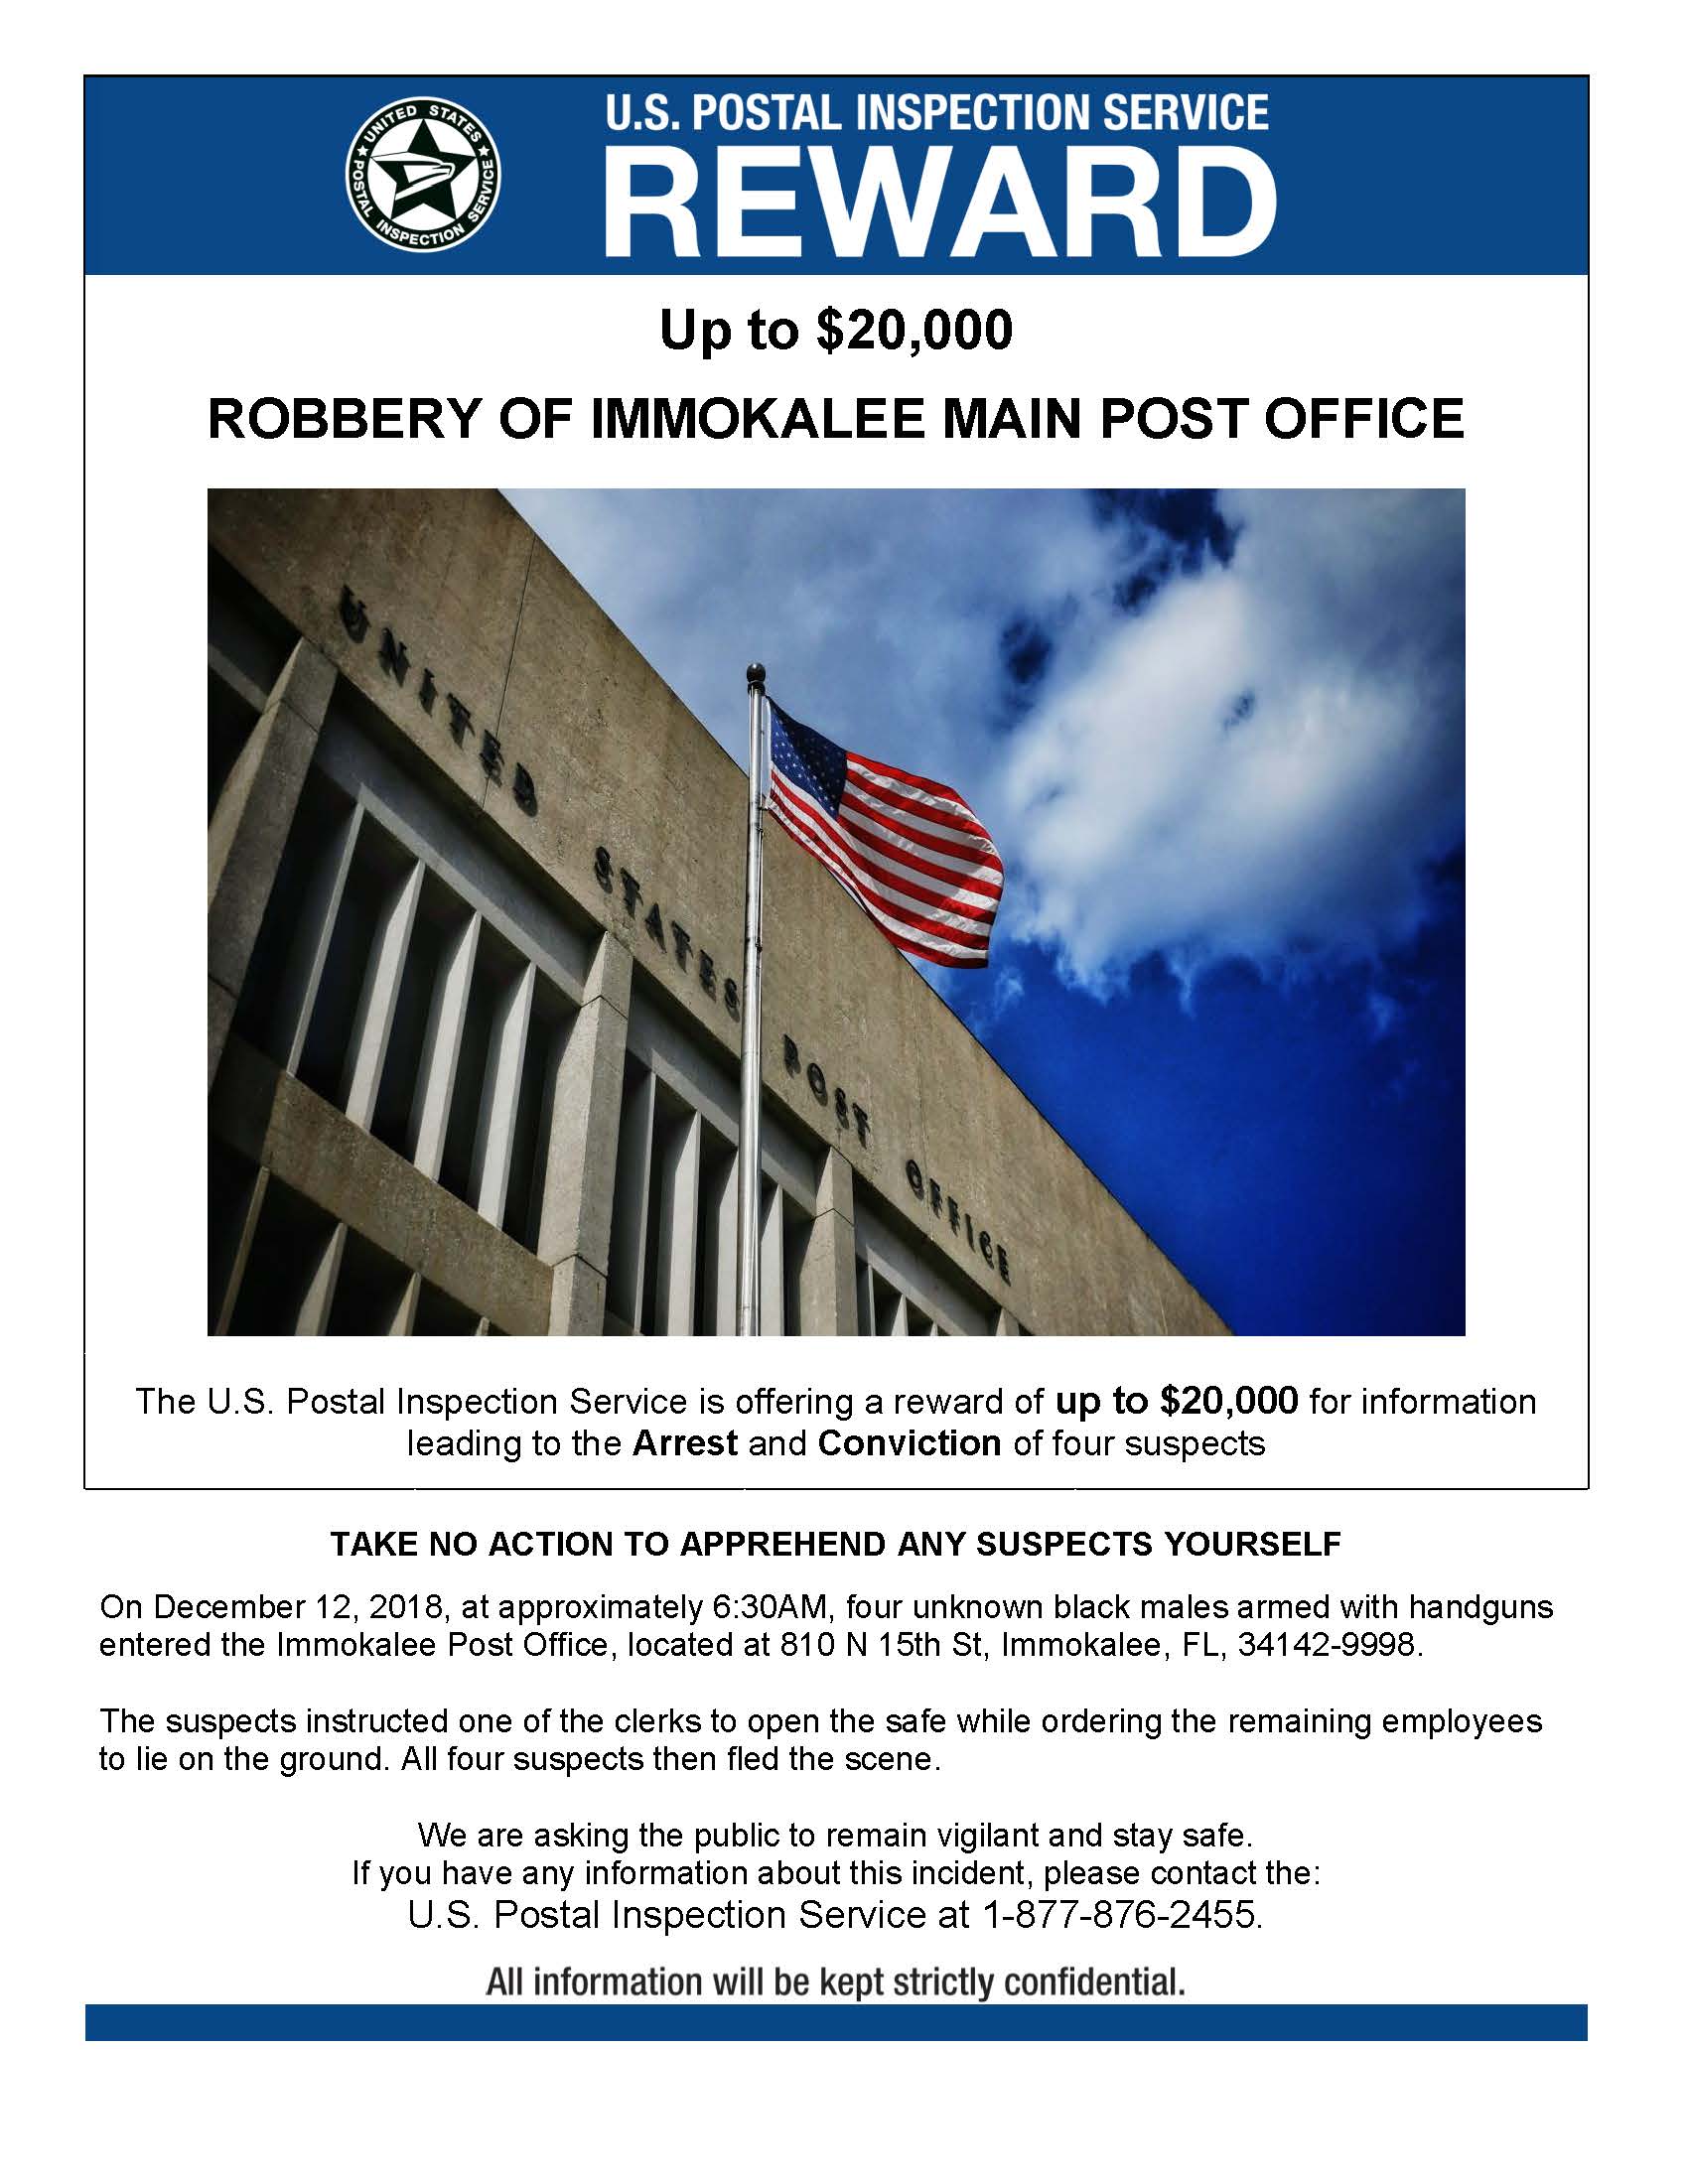 Immokalee main Post office robbery